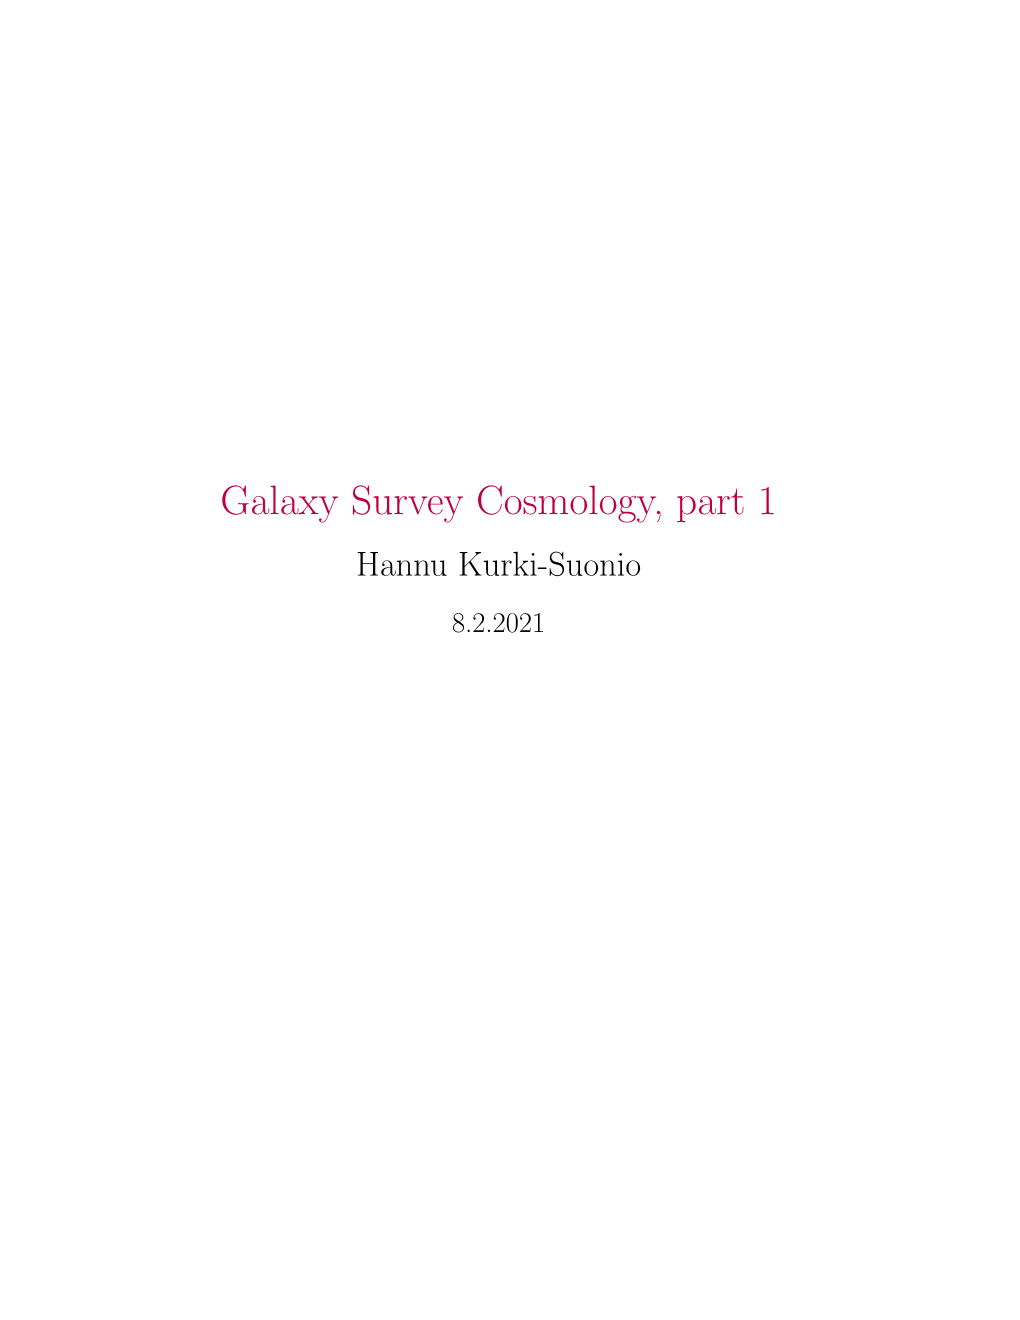 Galaxy Survey Cosmology, Part 1 Hannu Kurki-Suonio 8.2.2021 Contents